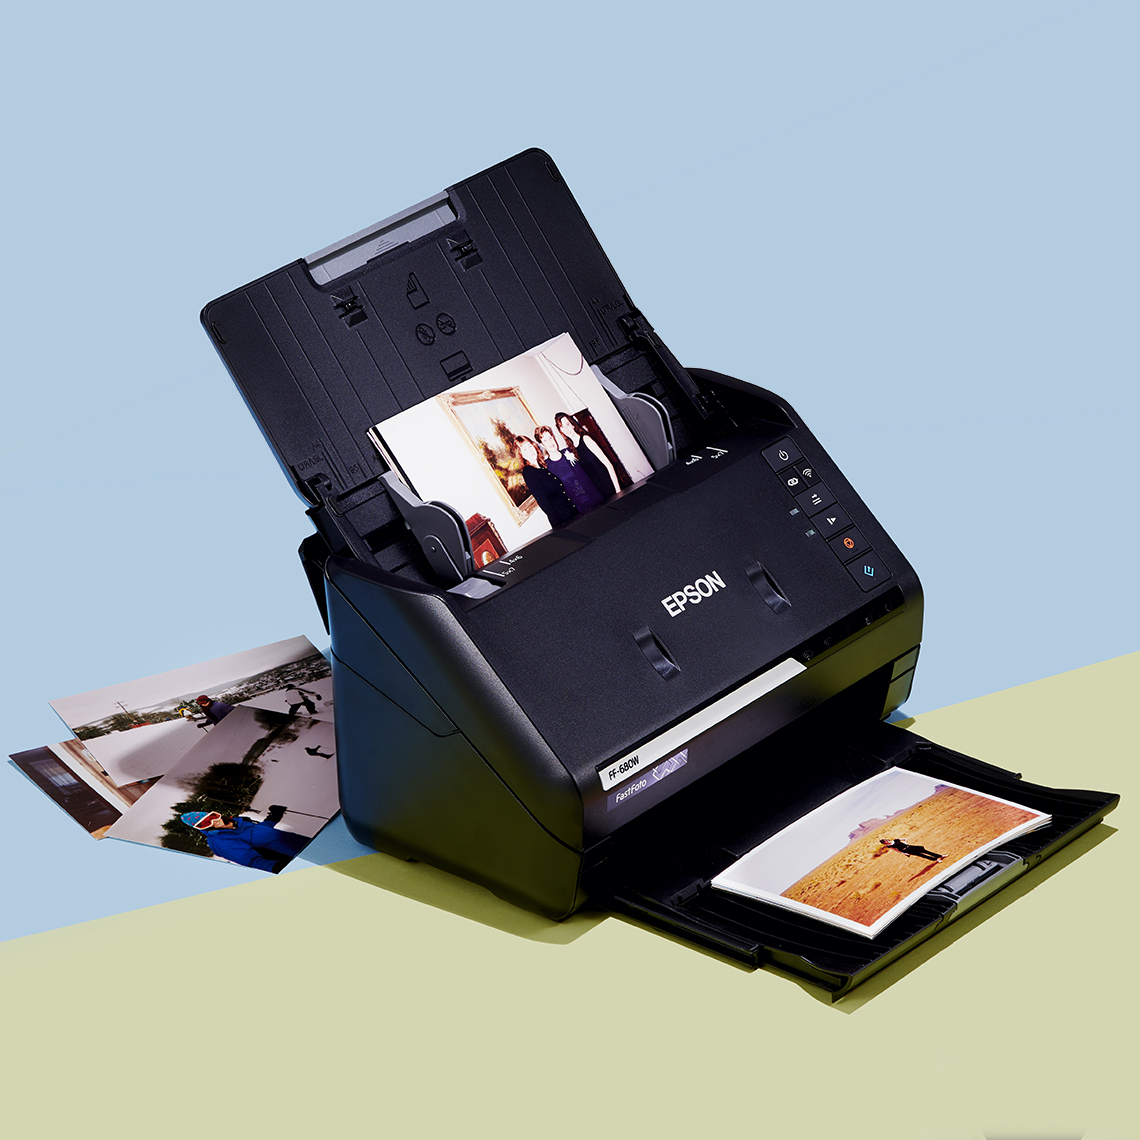 A digital photo scanner